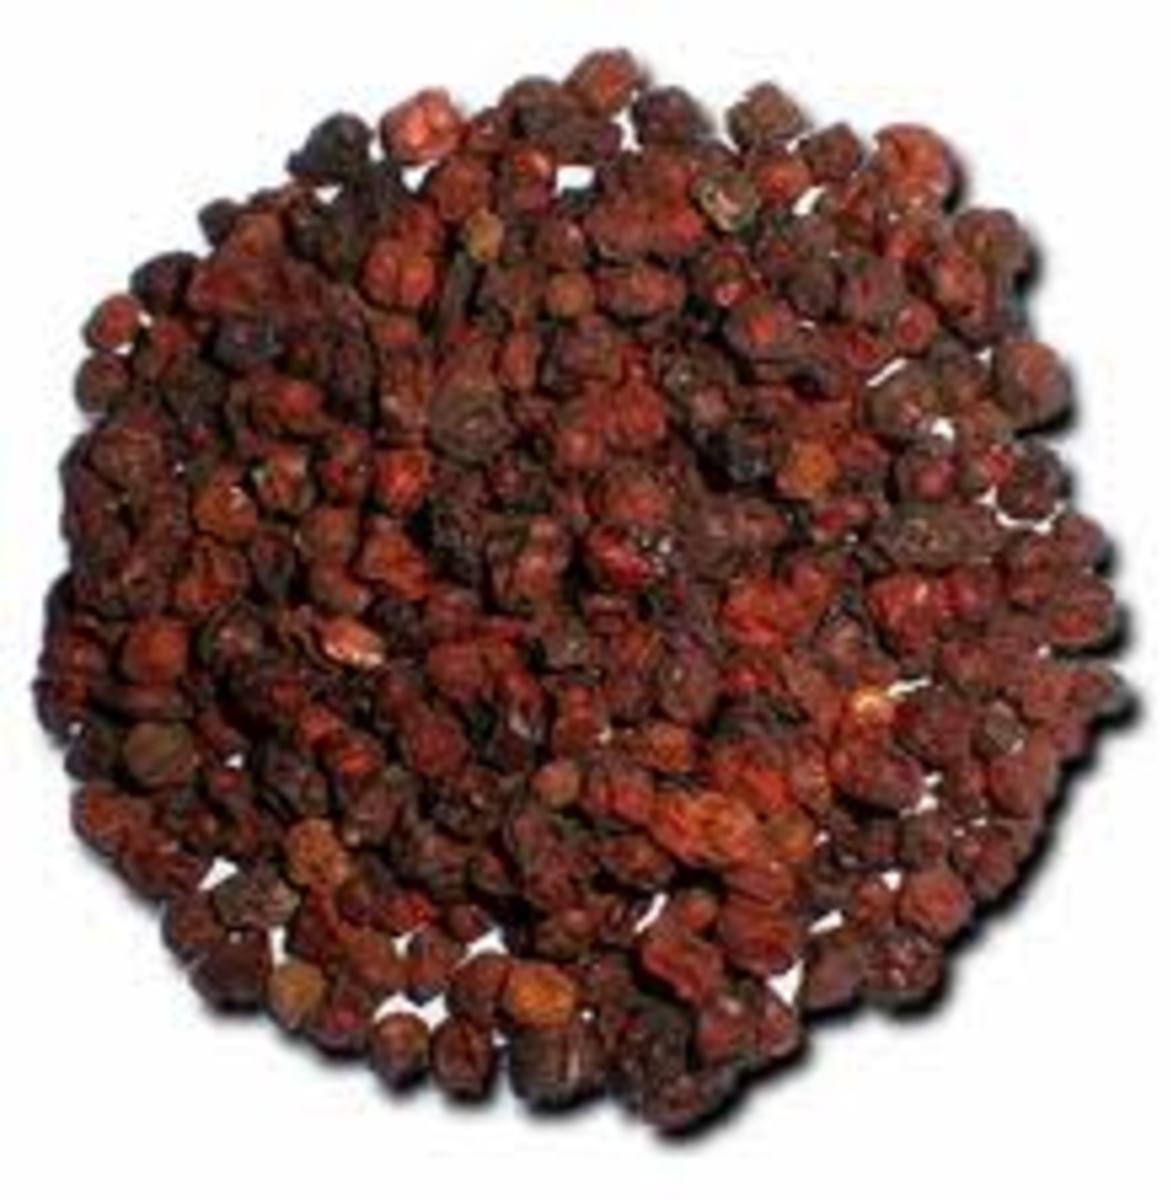 Schsandra berries help to support liver detox.